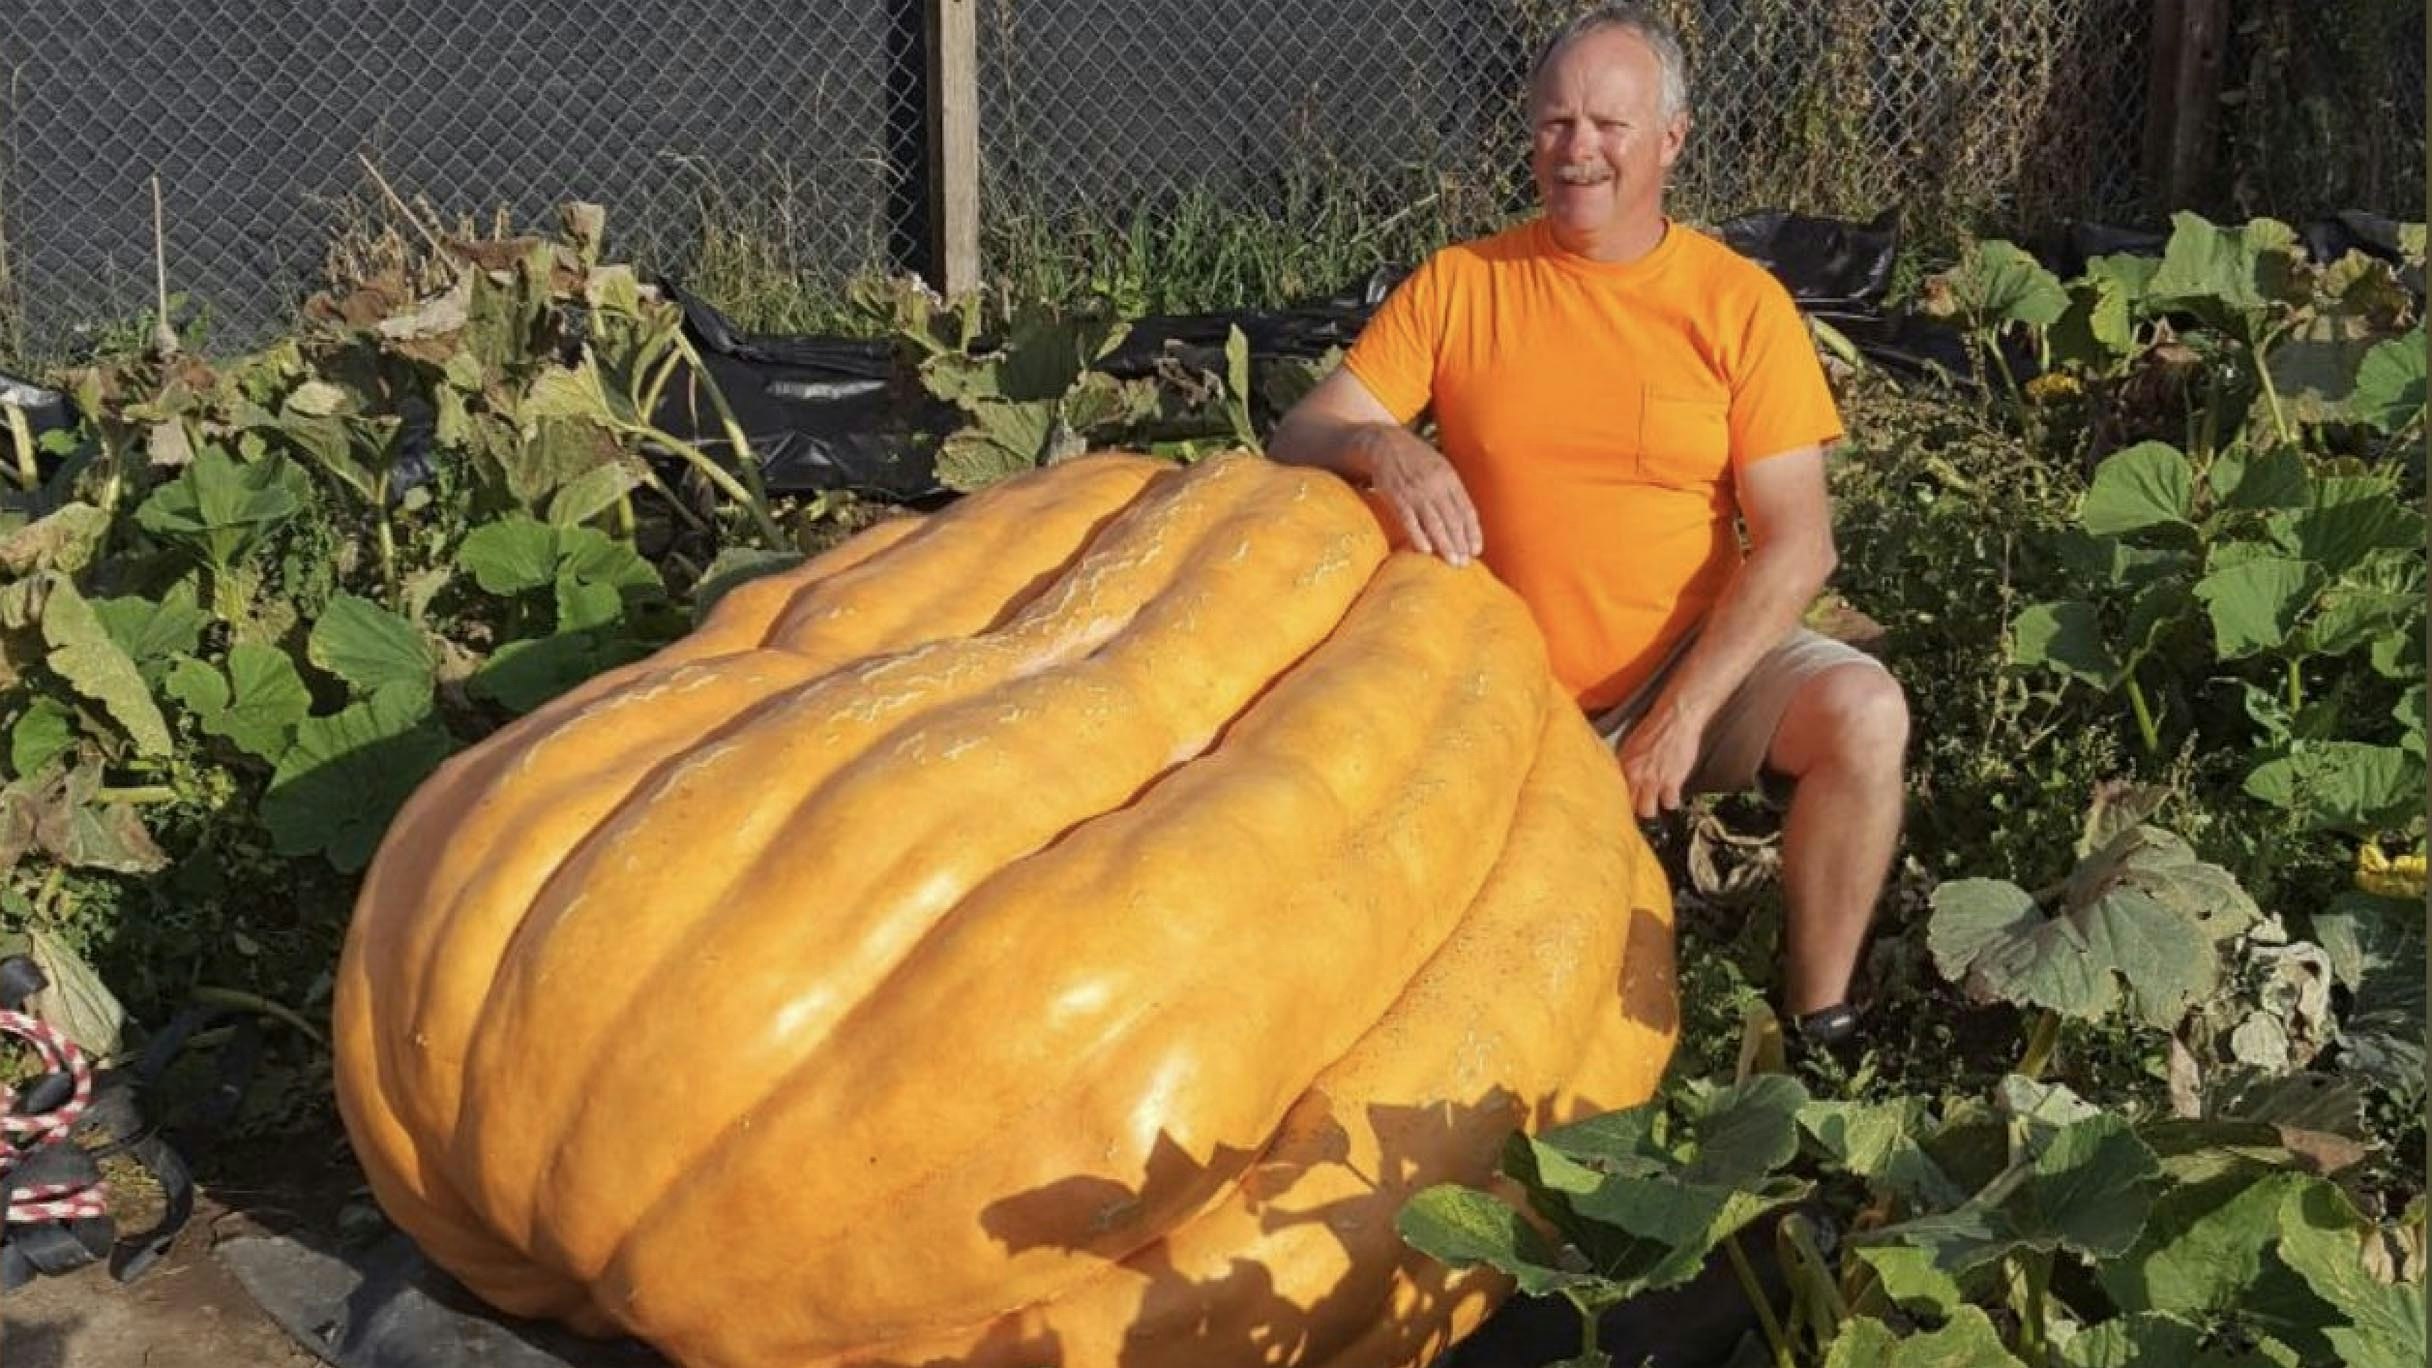 Giant pumpkin jay richard 5 8 23